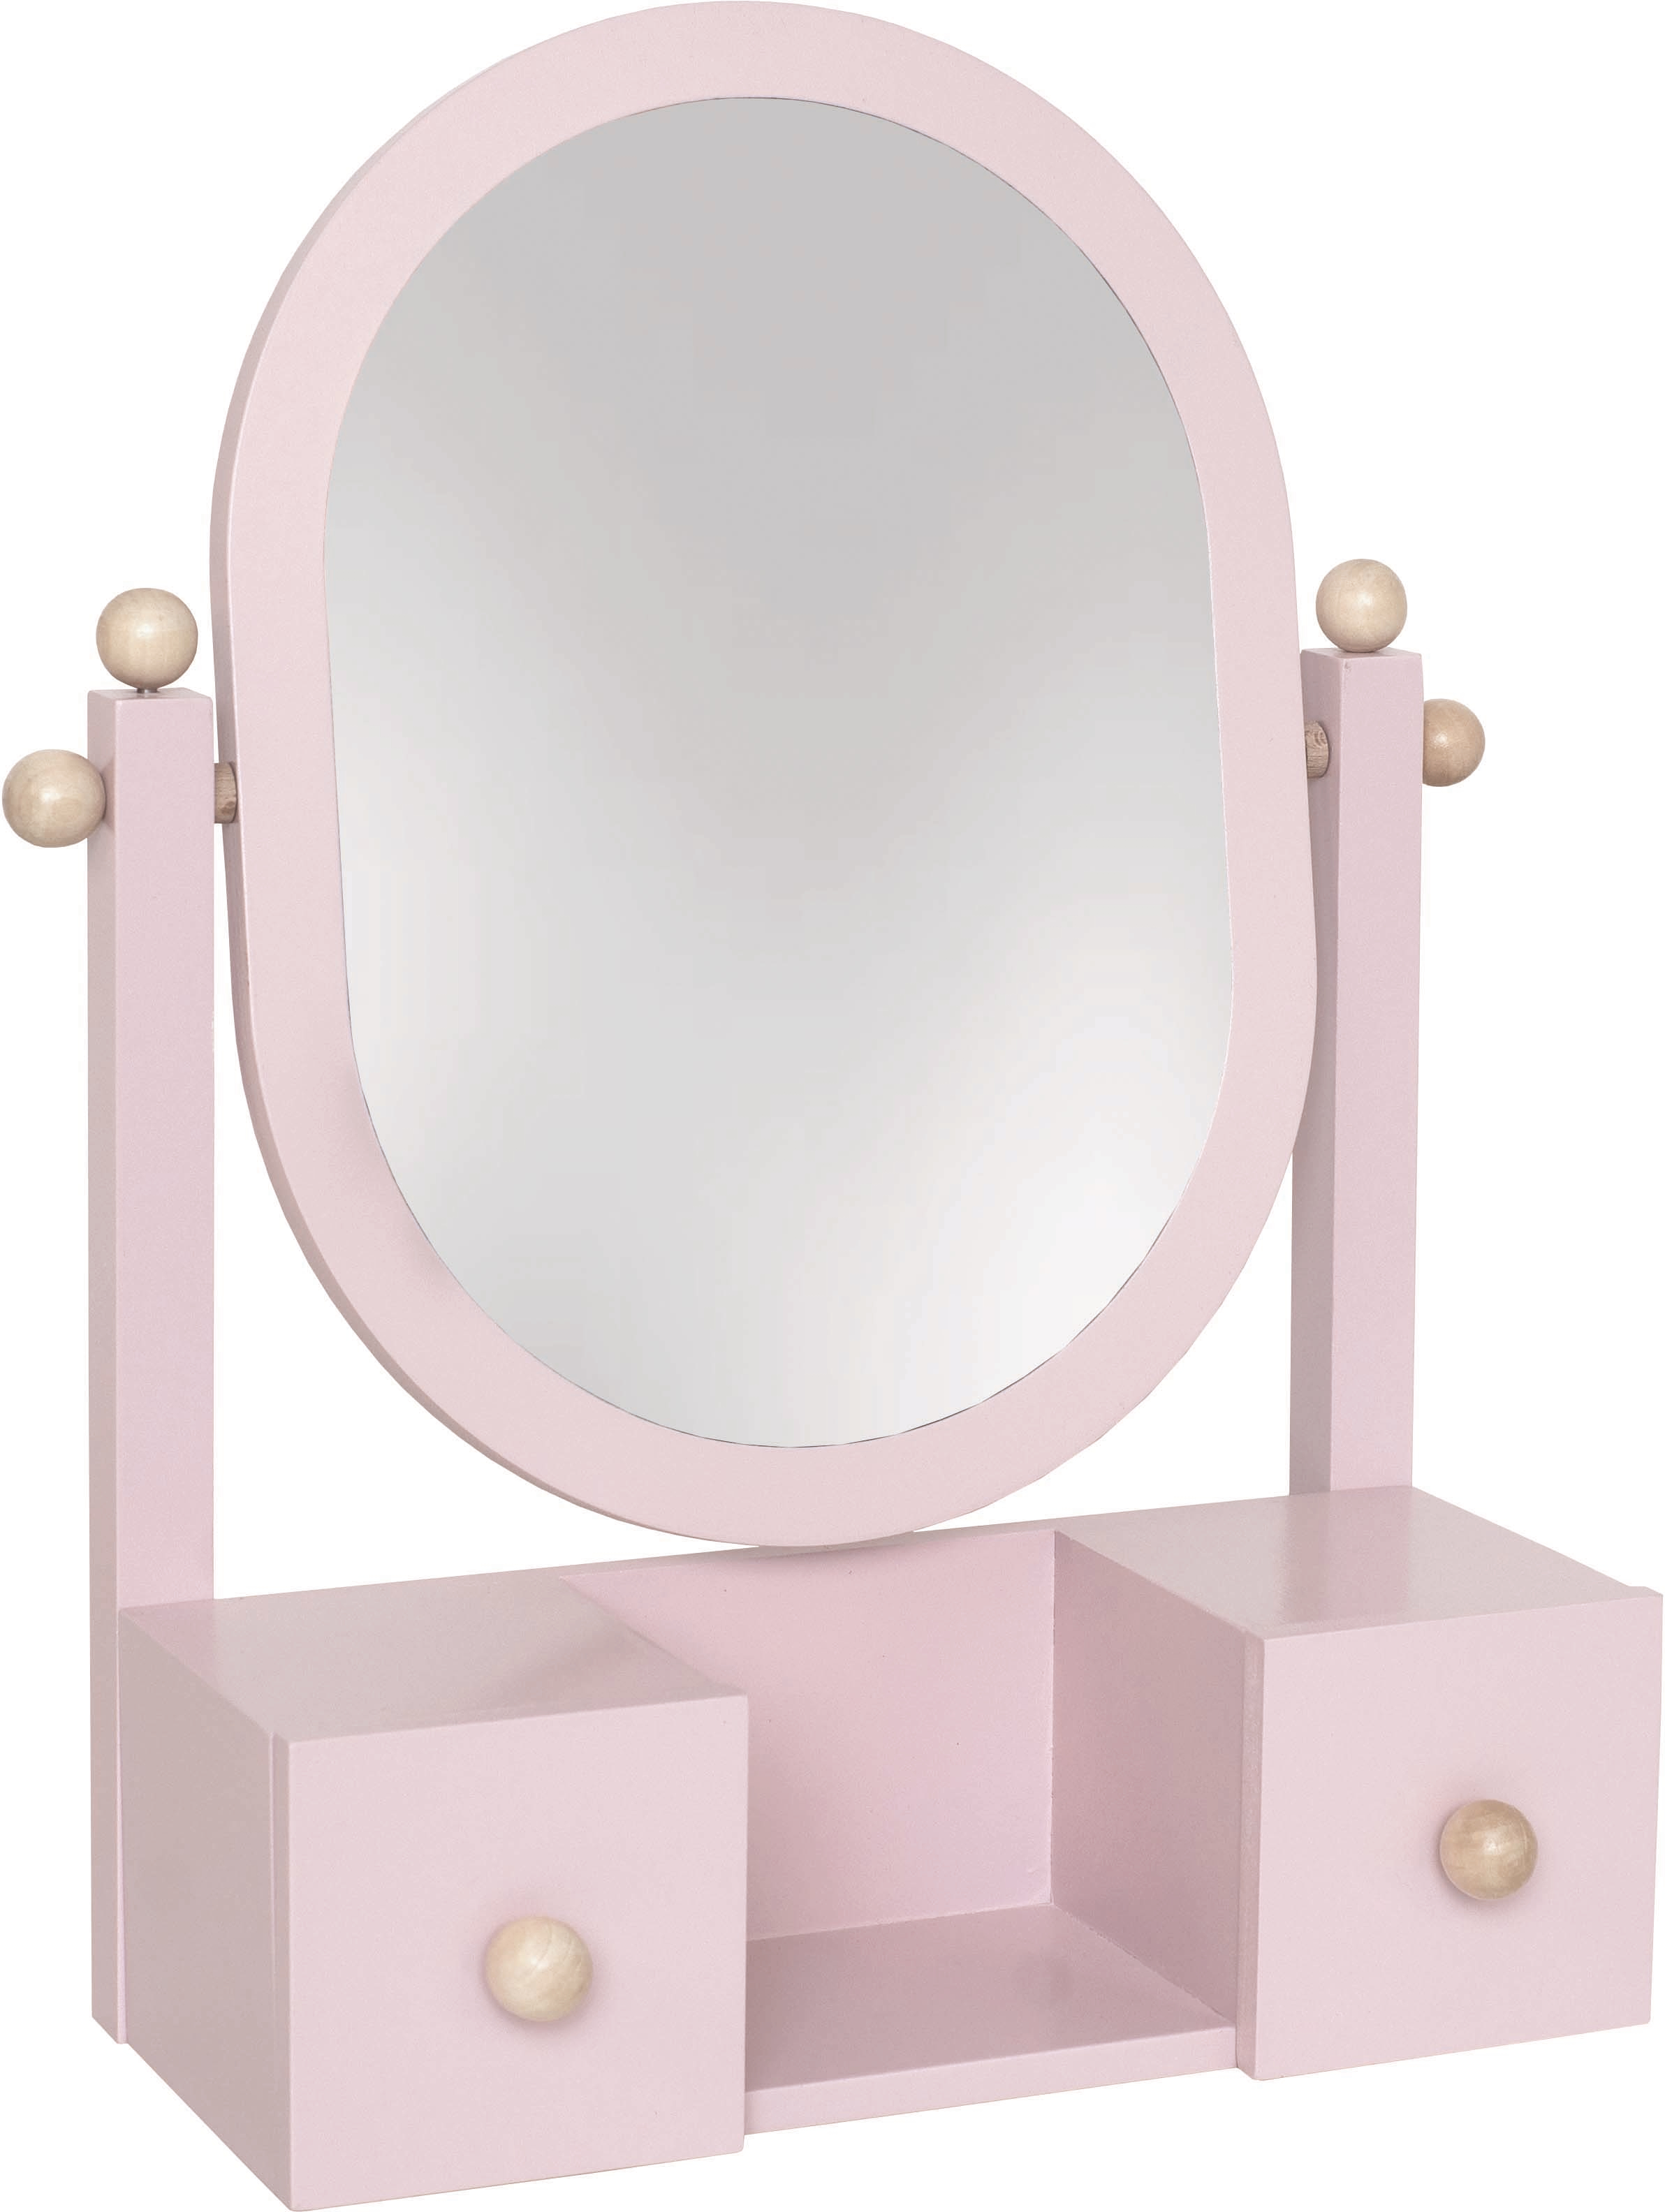 JABADABADO Vanity mirror W7179 pink